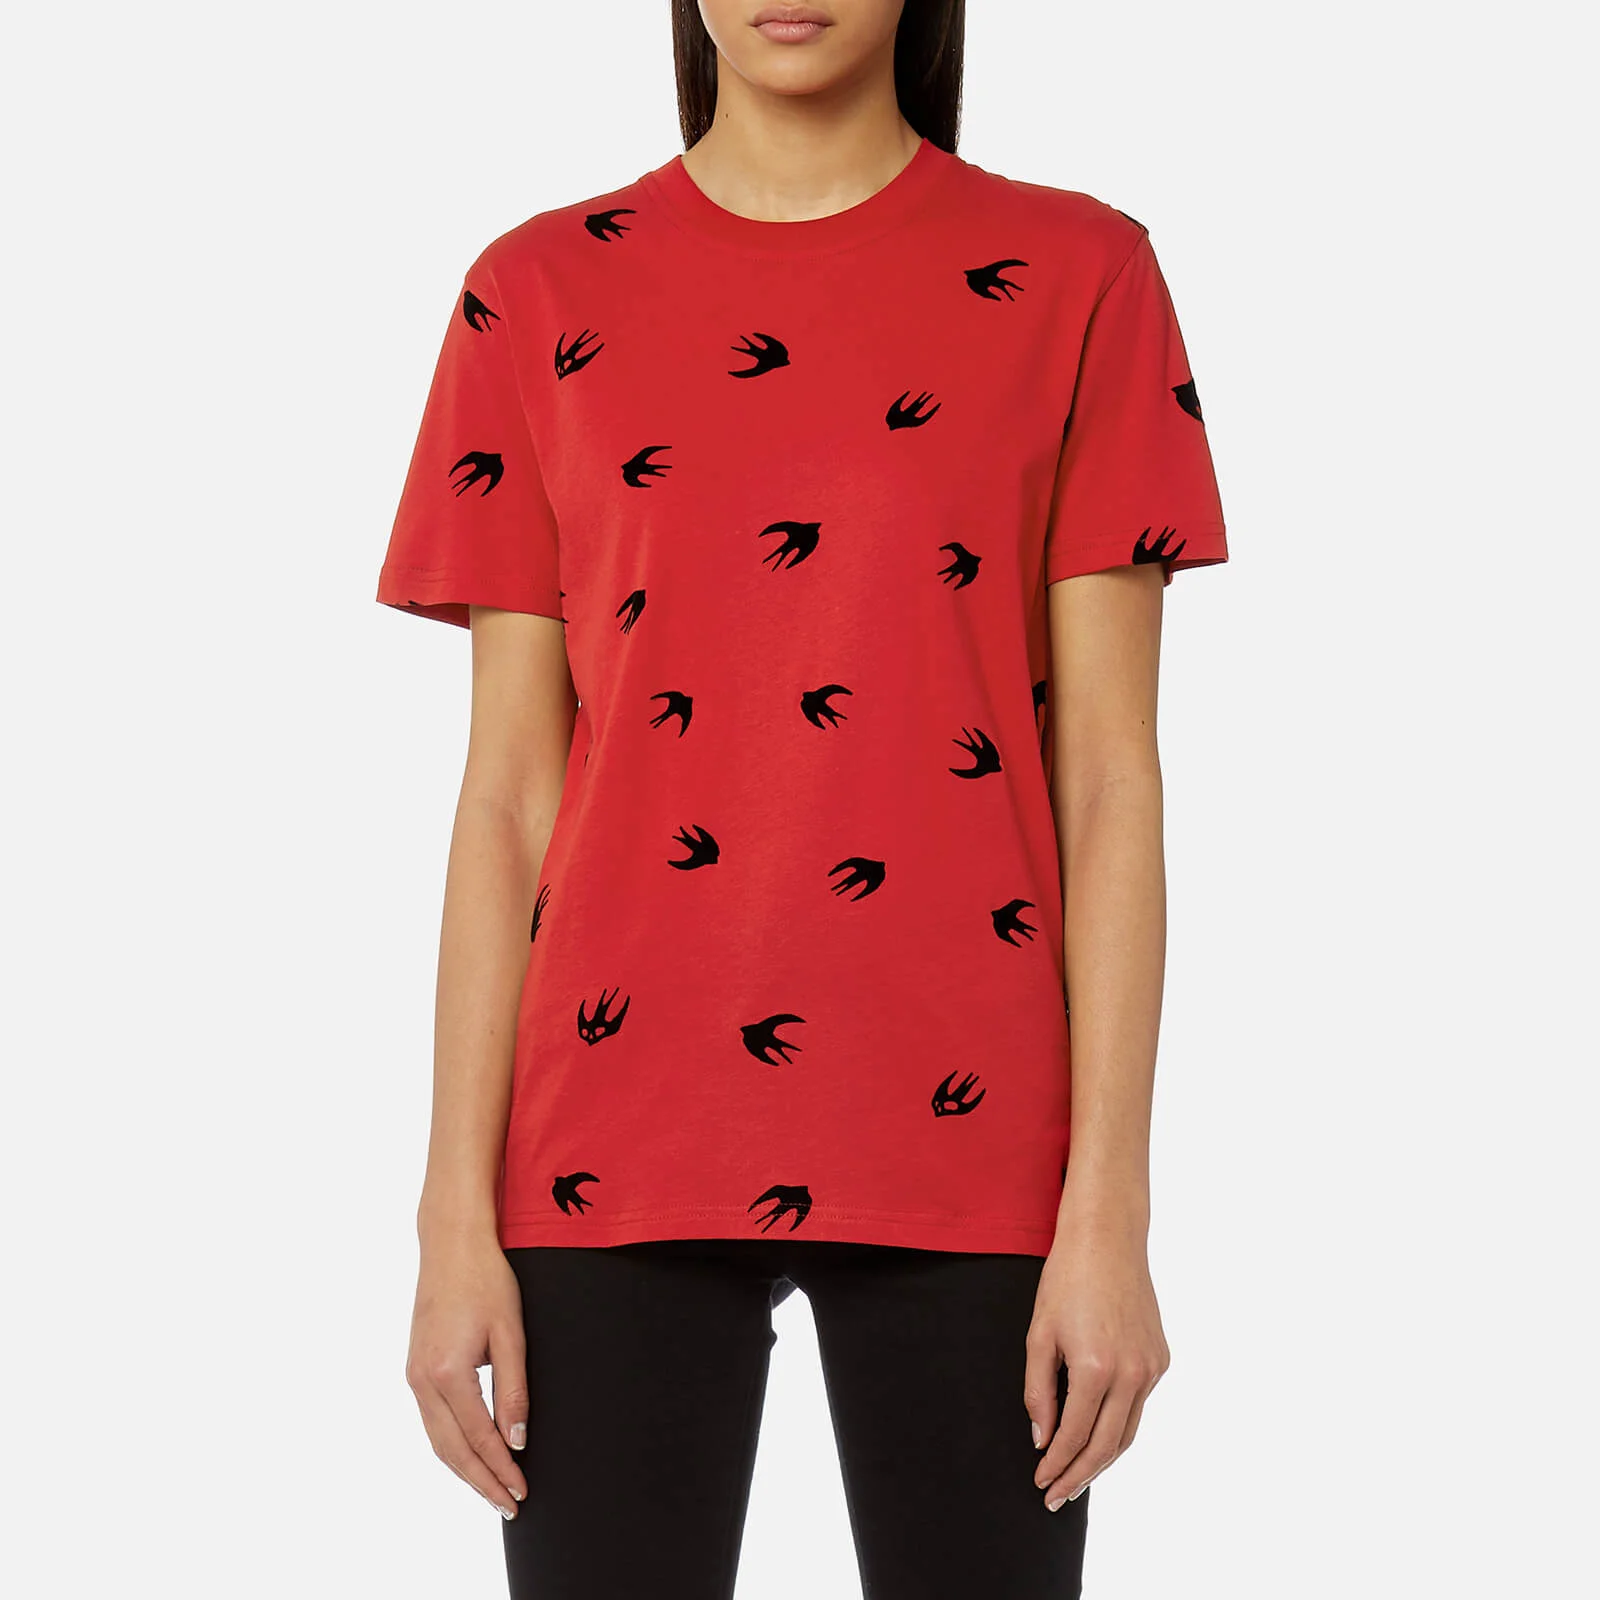 McQ Alexander McQueen Women's Classic T-Shirt - Amp Red/Black Swallow Image 1